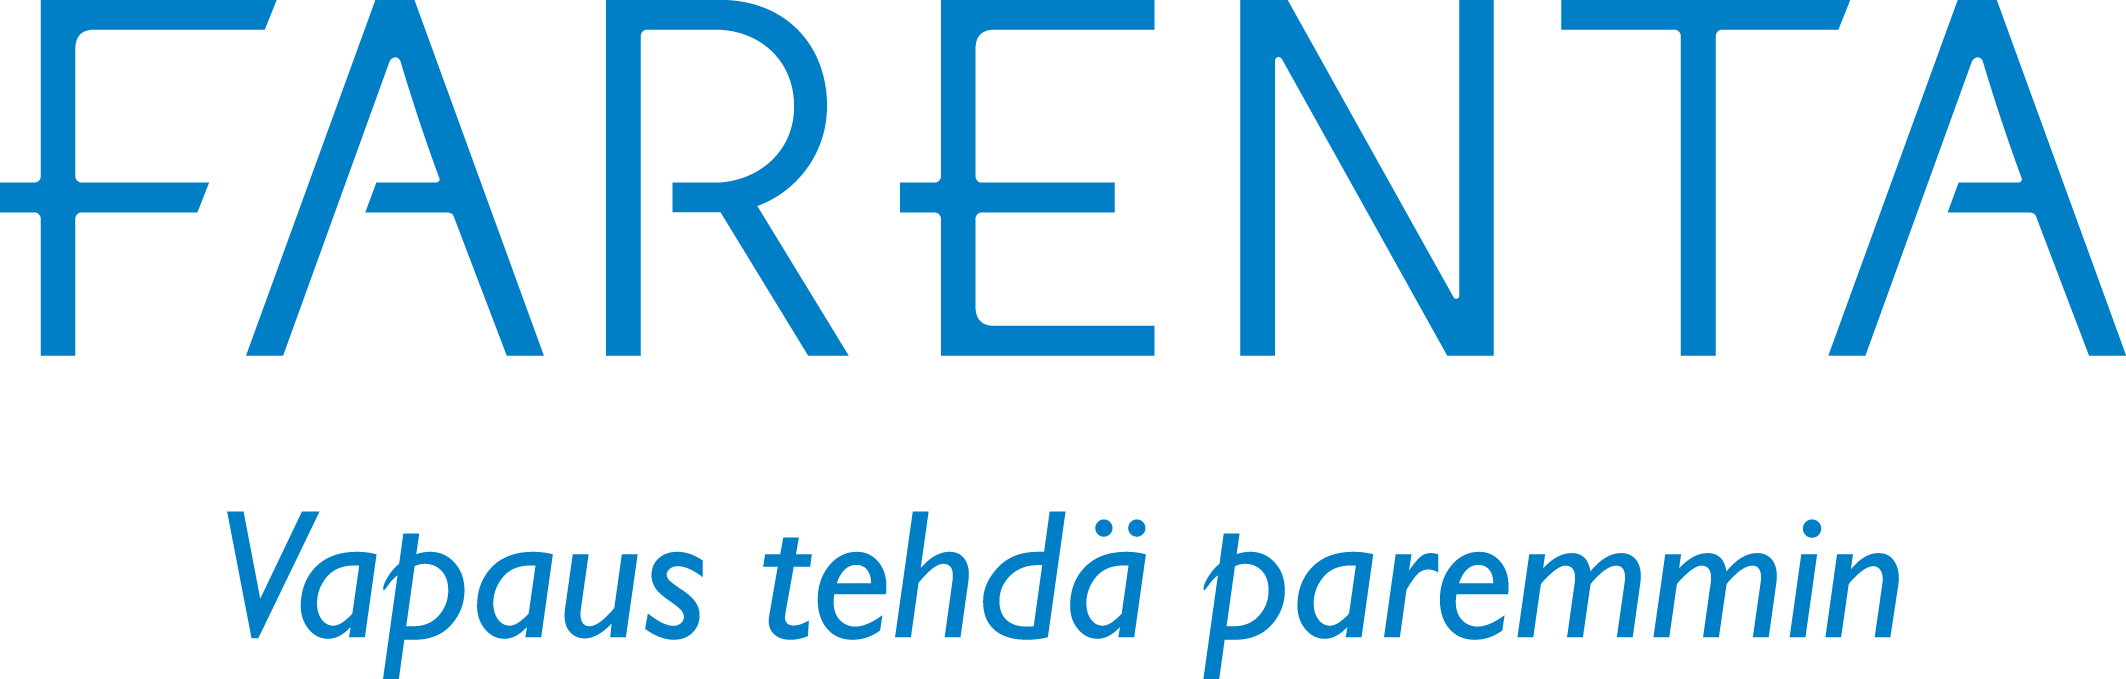 Farenta header logo fi